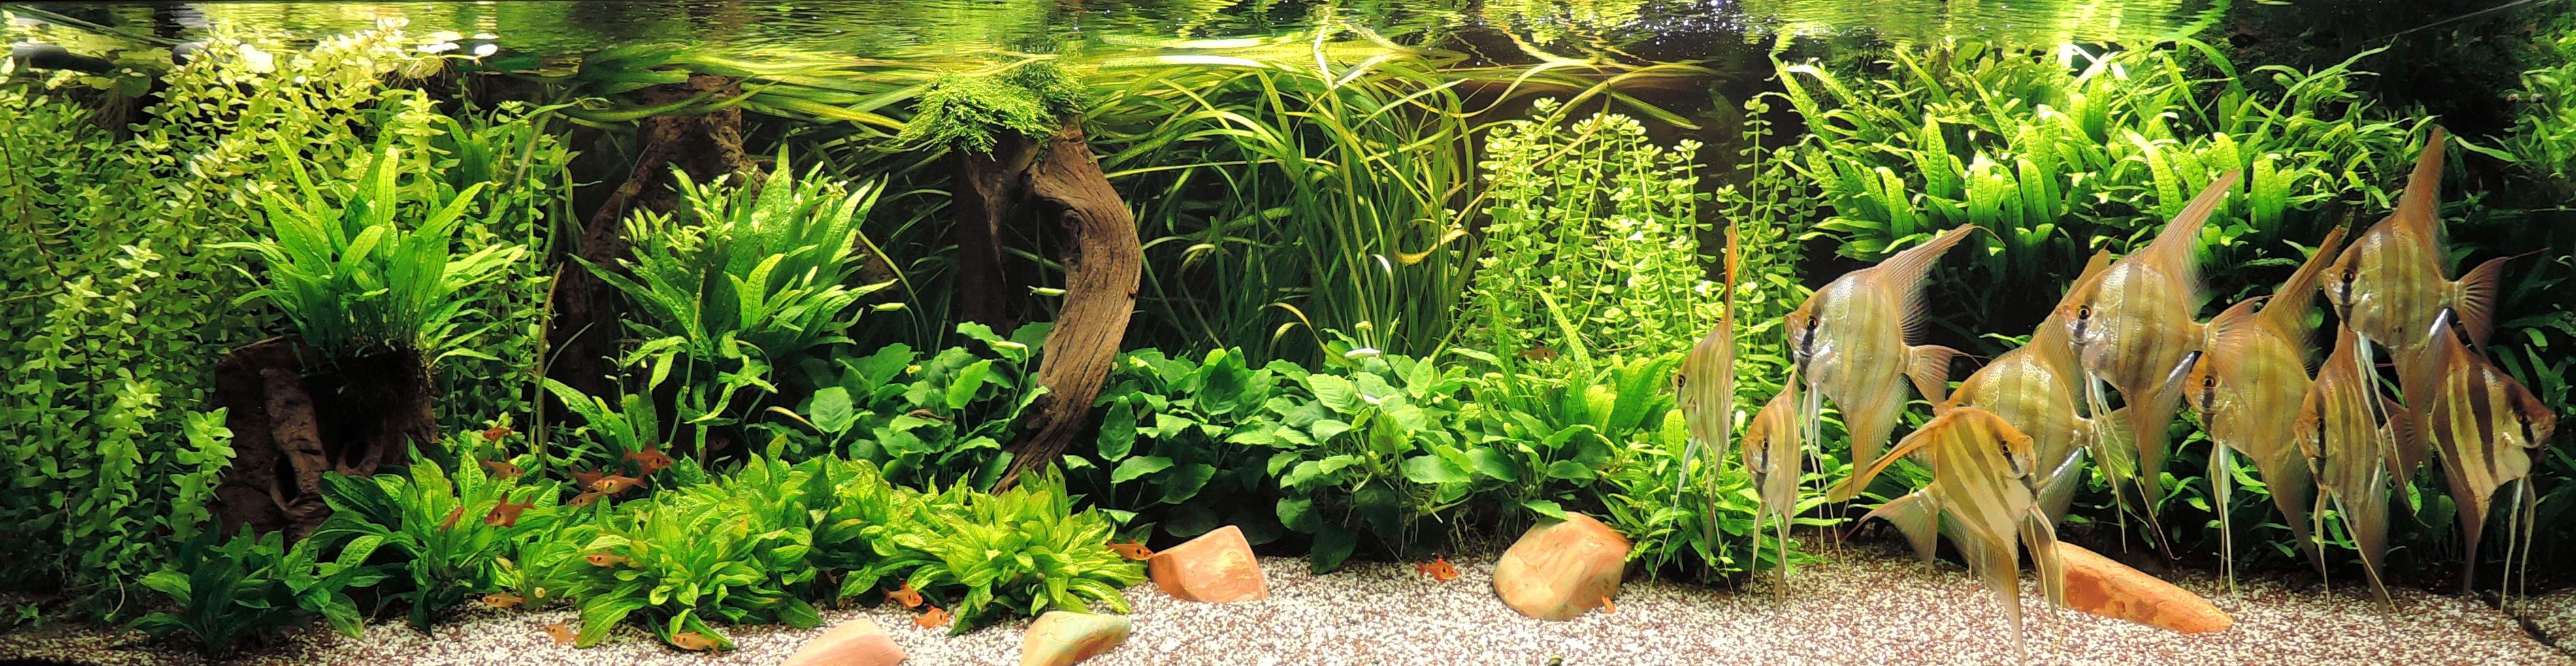 Plant tank altum angelfish 02/17